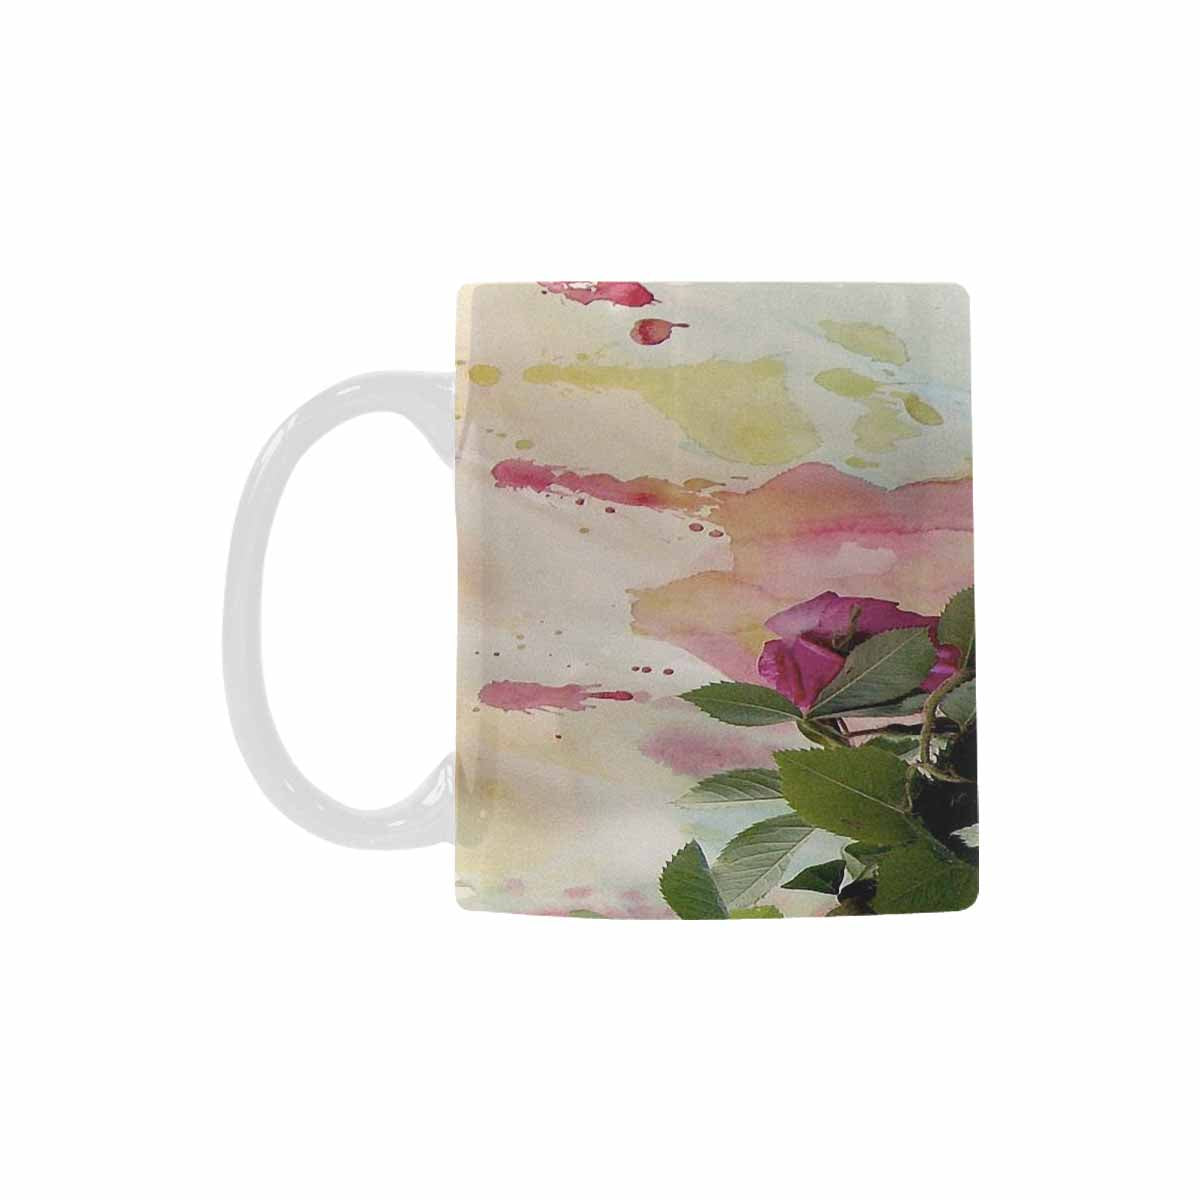 Vintage floral coffee mug or tea cup, Design 21